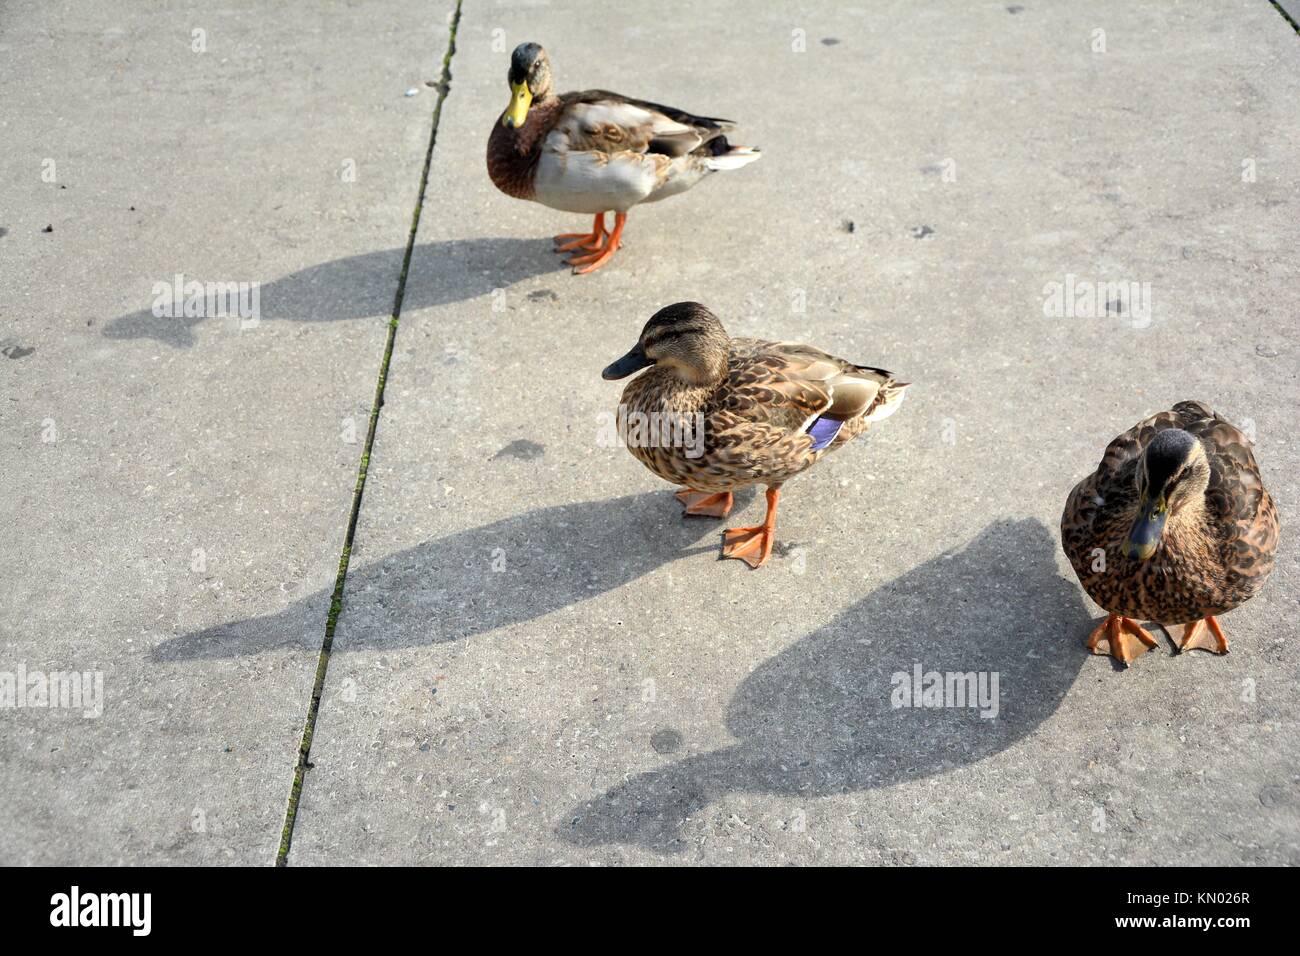 Three wild ducks (mallards) standing on concrete slab Stock Photo